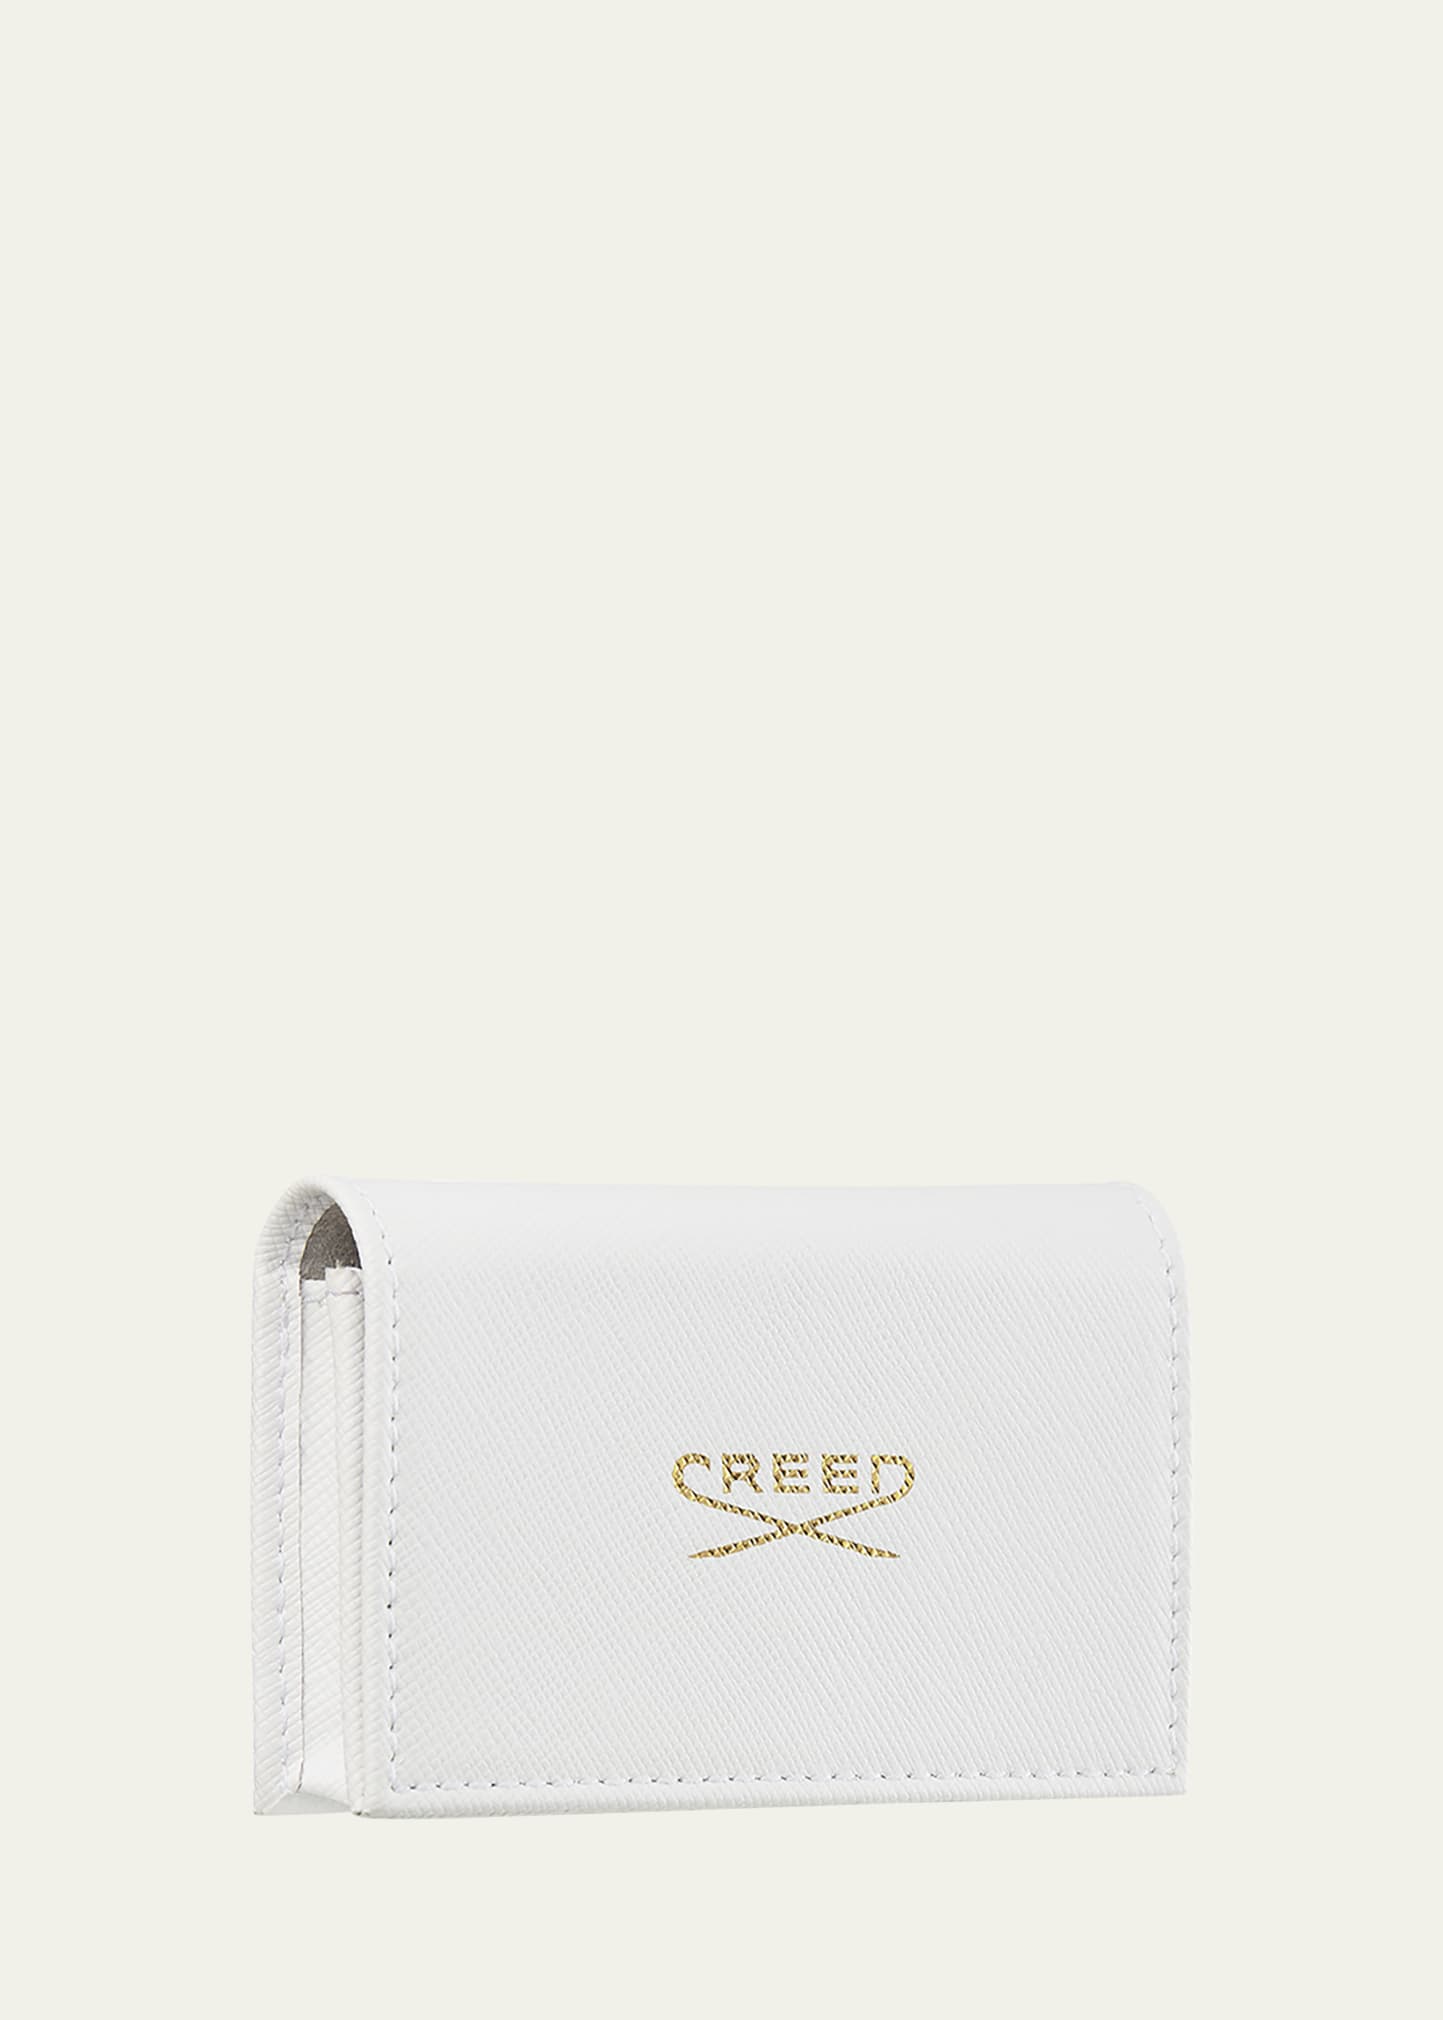 Creed Women's White Luxury Fragrance Wallet, 8 x 1.7 mL